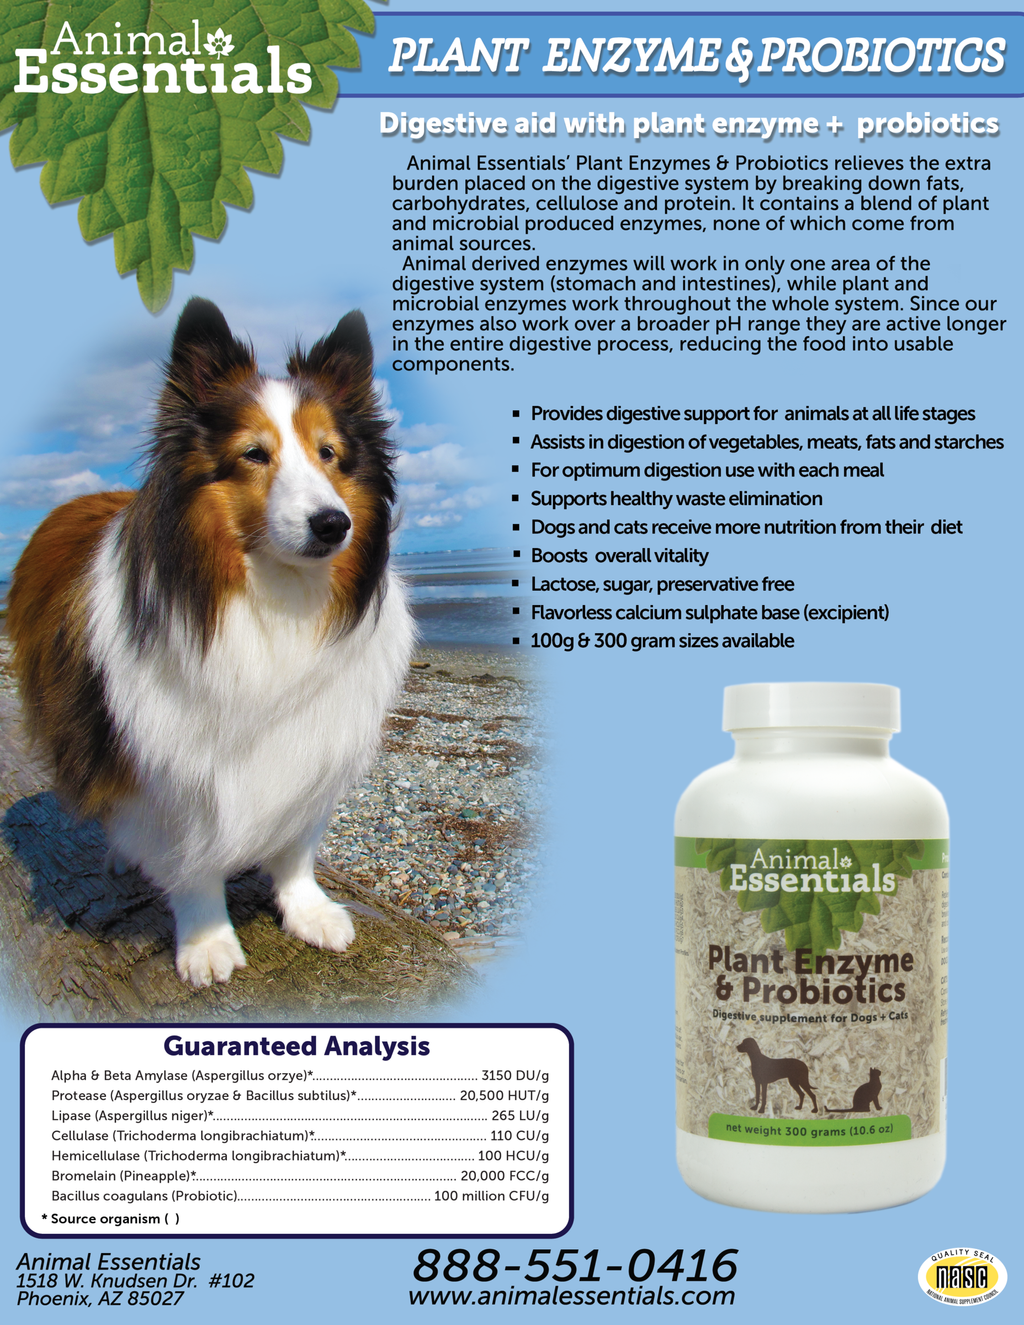 Animal Essentials - Plant Enzyme & Probiotics 03